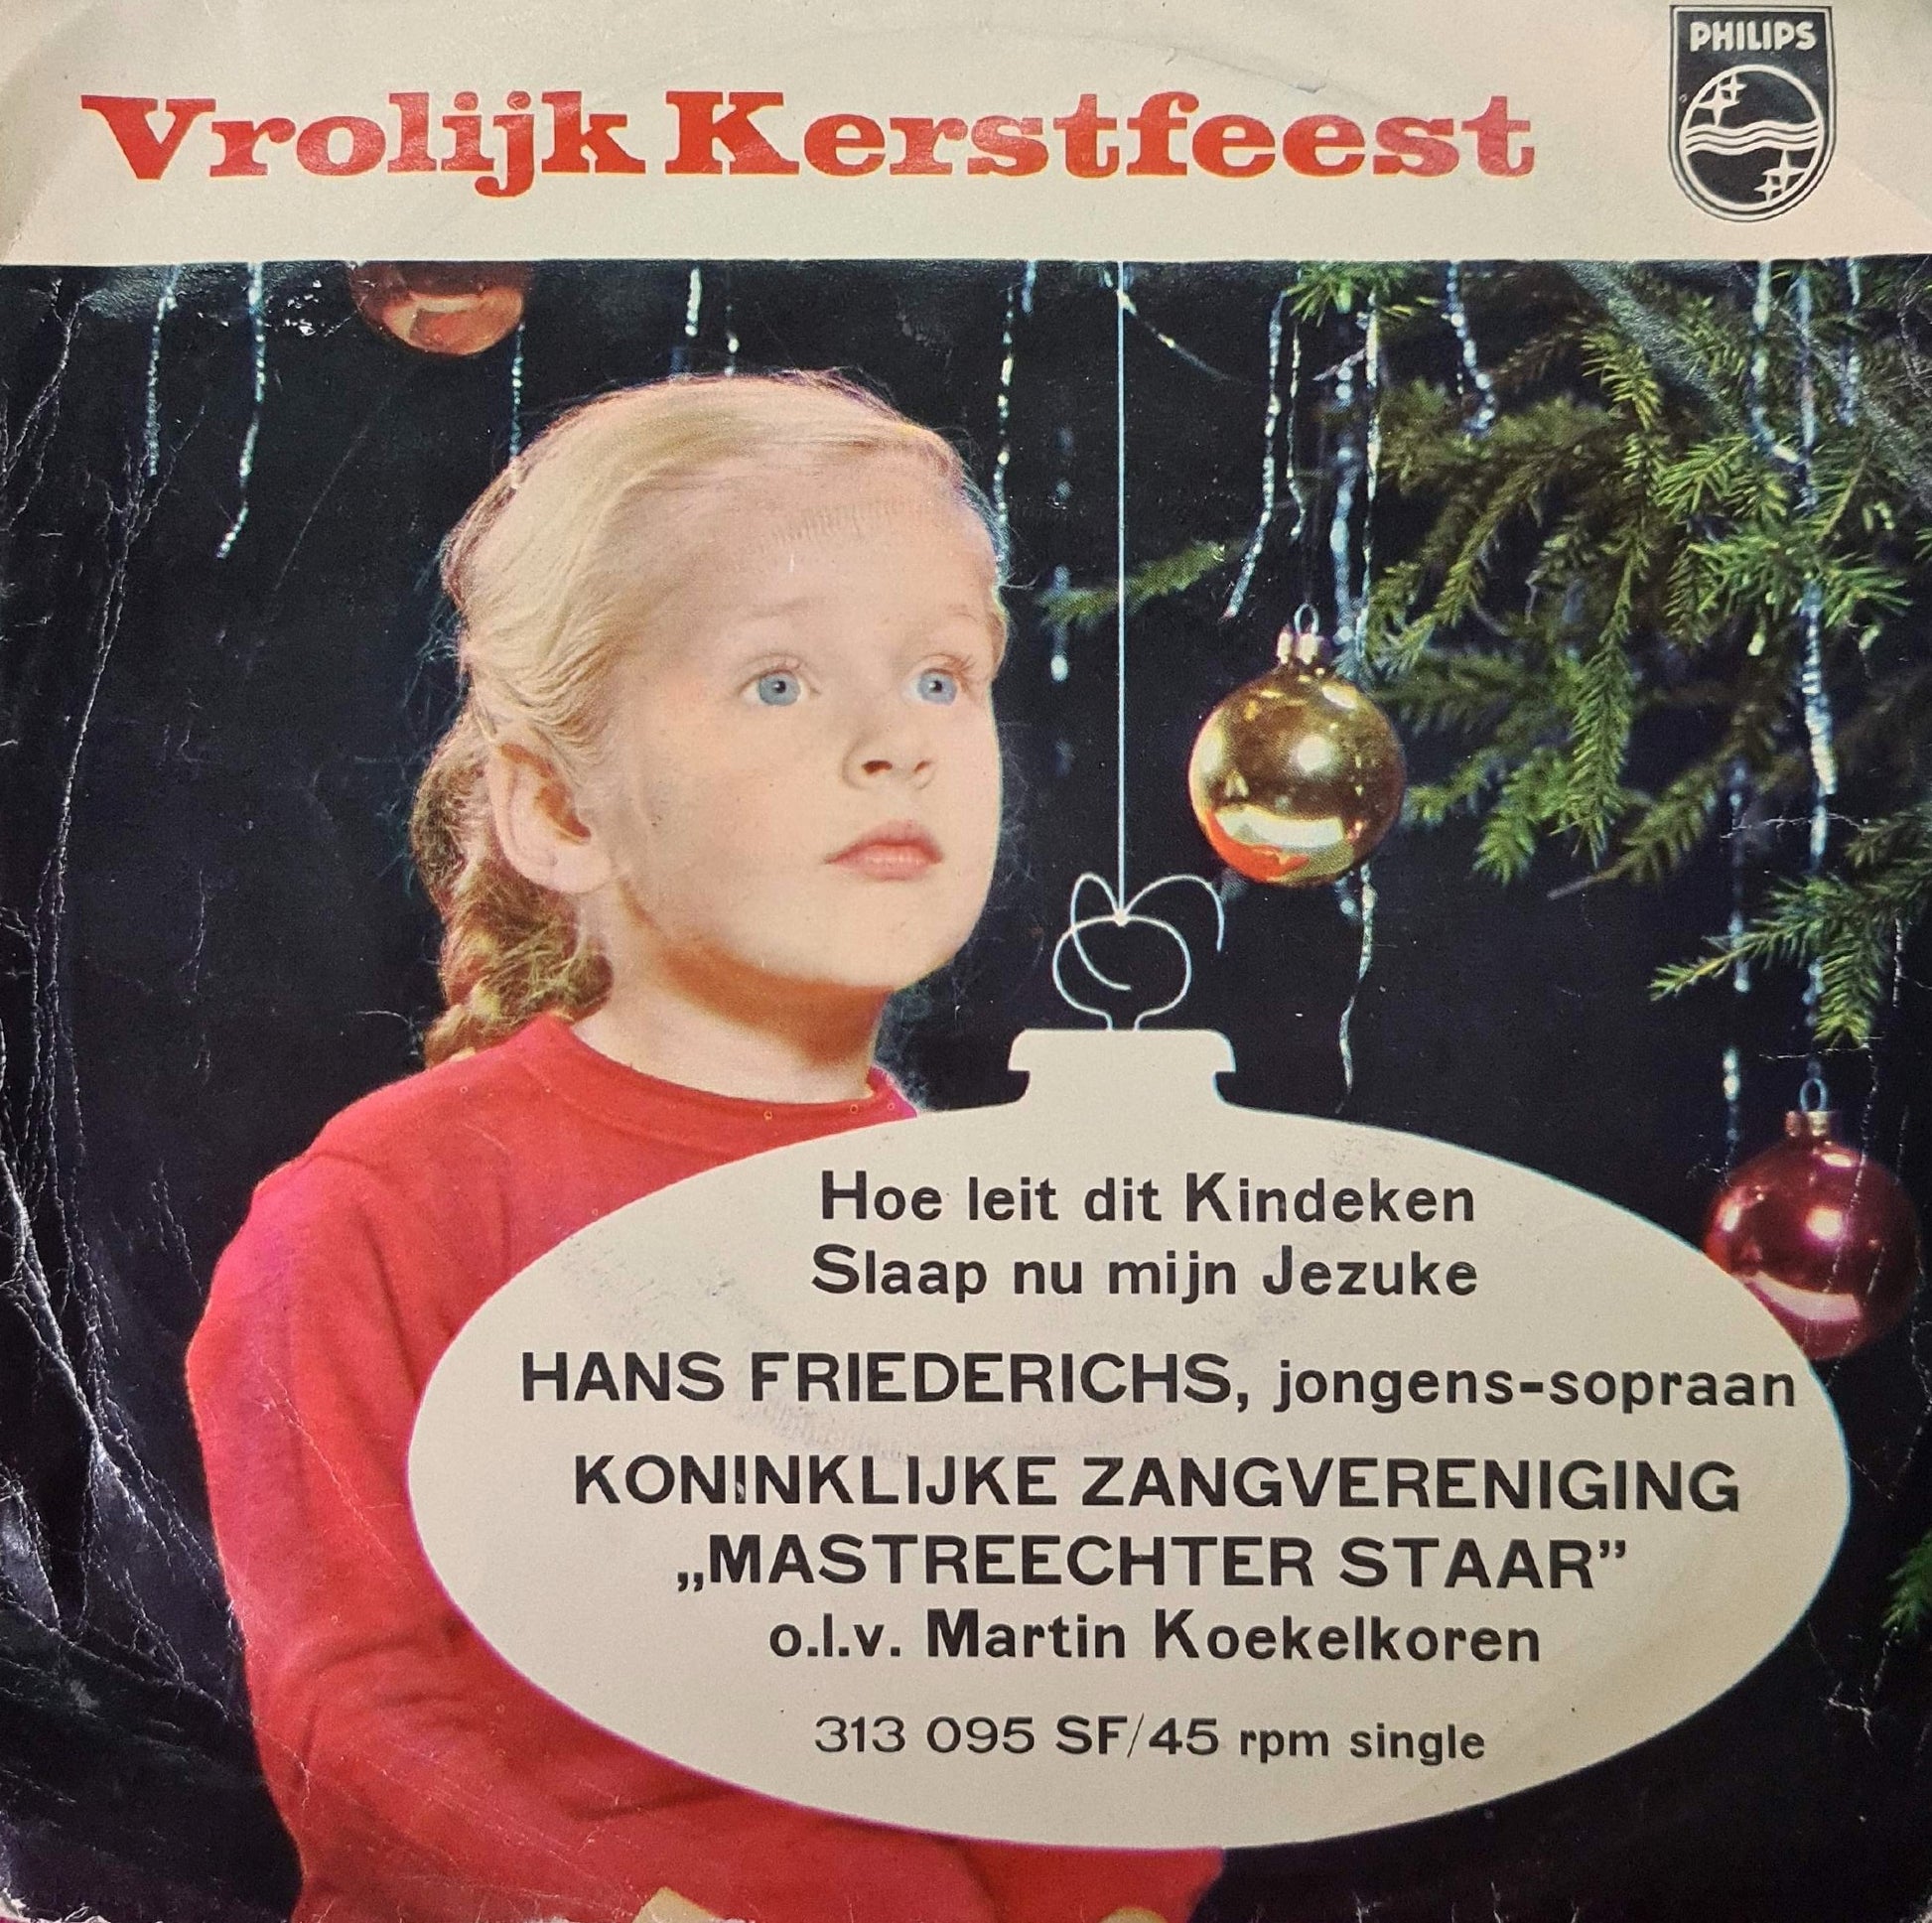 Mastreechter Staar - Hou leit dit kindeken 08247 Vinyl Singles VINYLSINGLES.NL